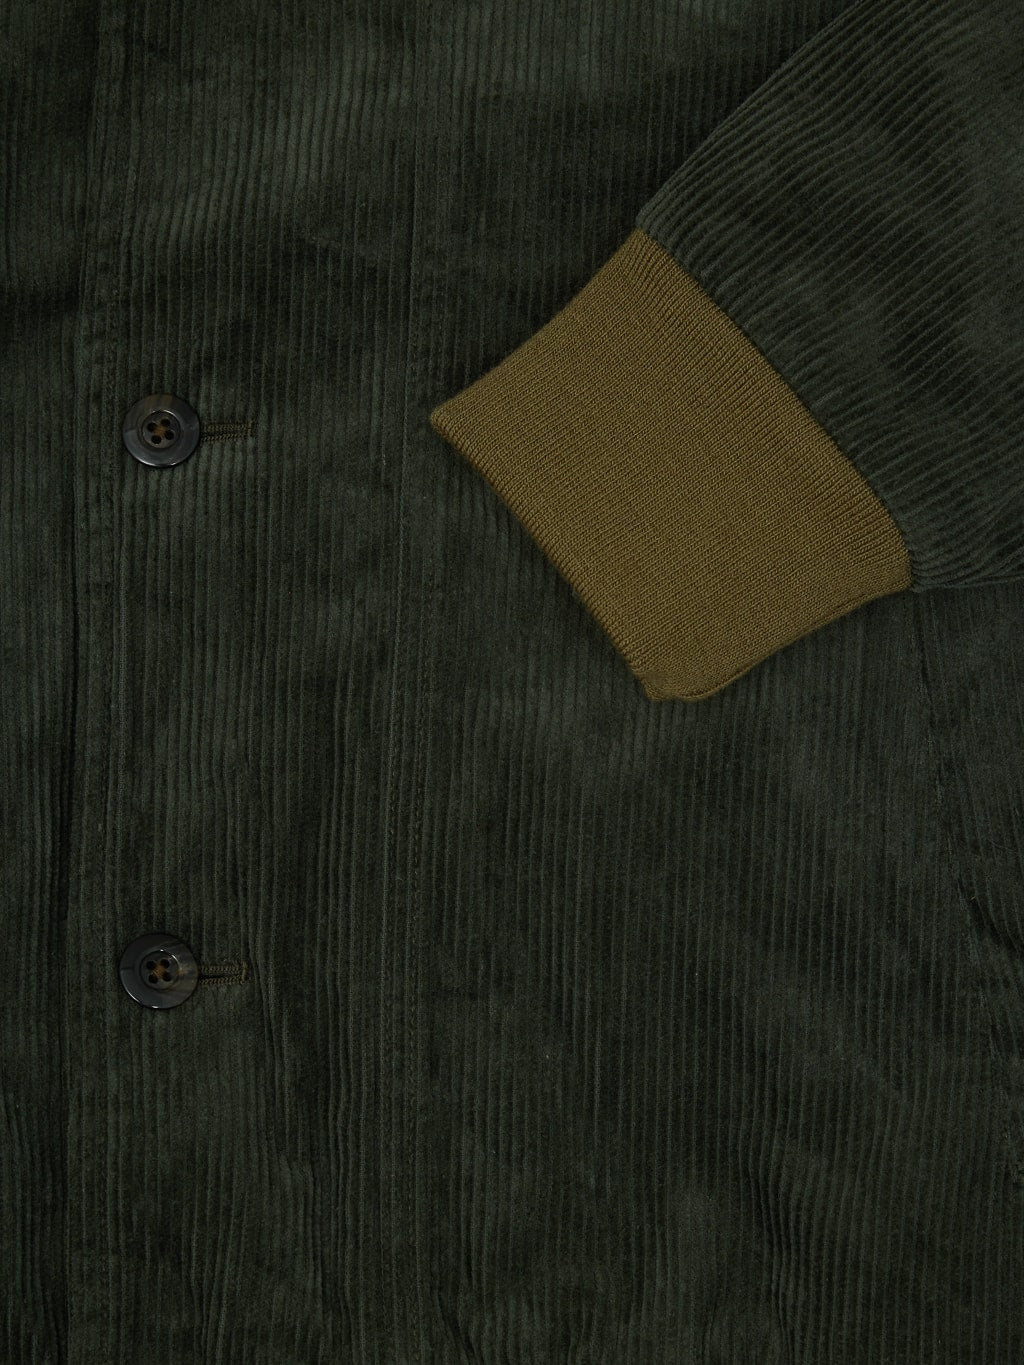 Tanuki Sazanami Corduroy Bayberry Dyed Green Jacket elastic cuff